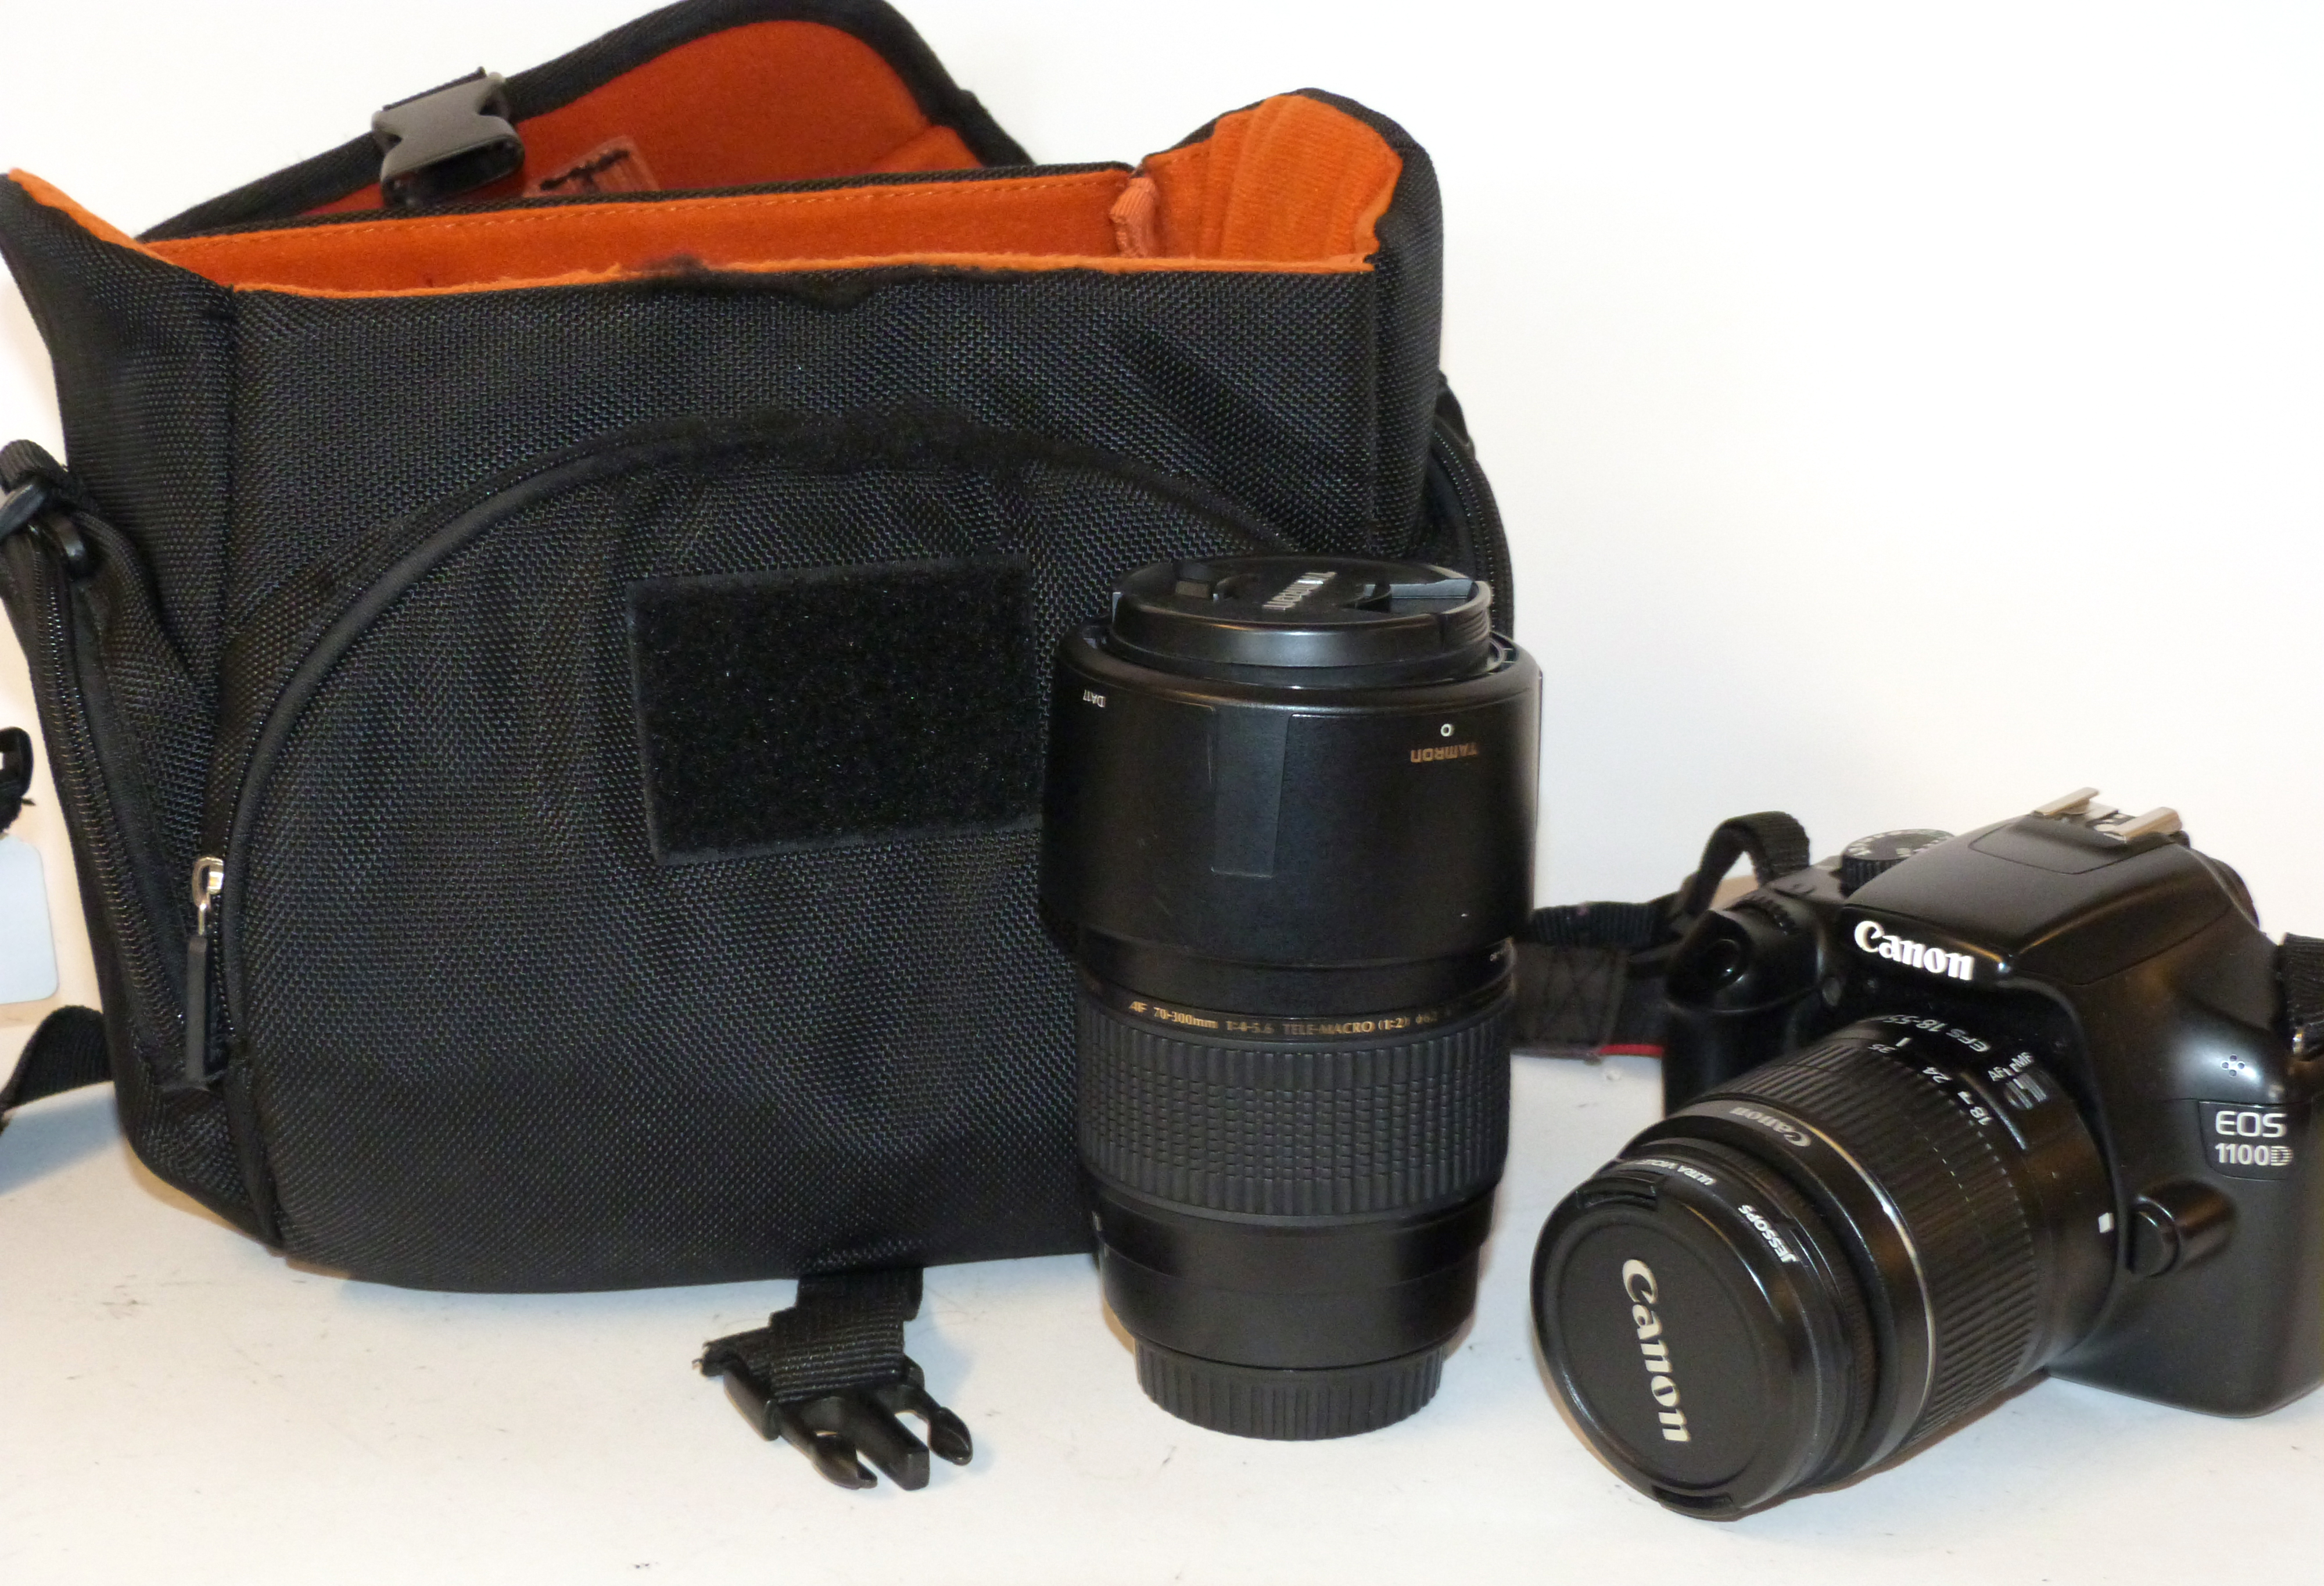 Canon EOS 1100 D digital camera together with Canon zoom lens EF-S 18-55mm, Tamron AF 70-300mm lens,